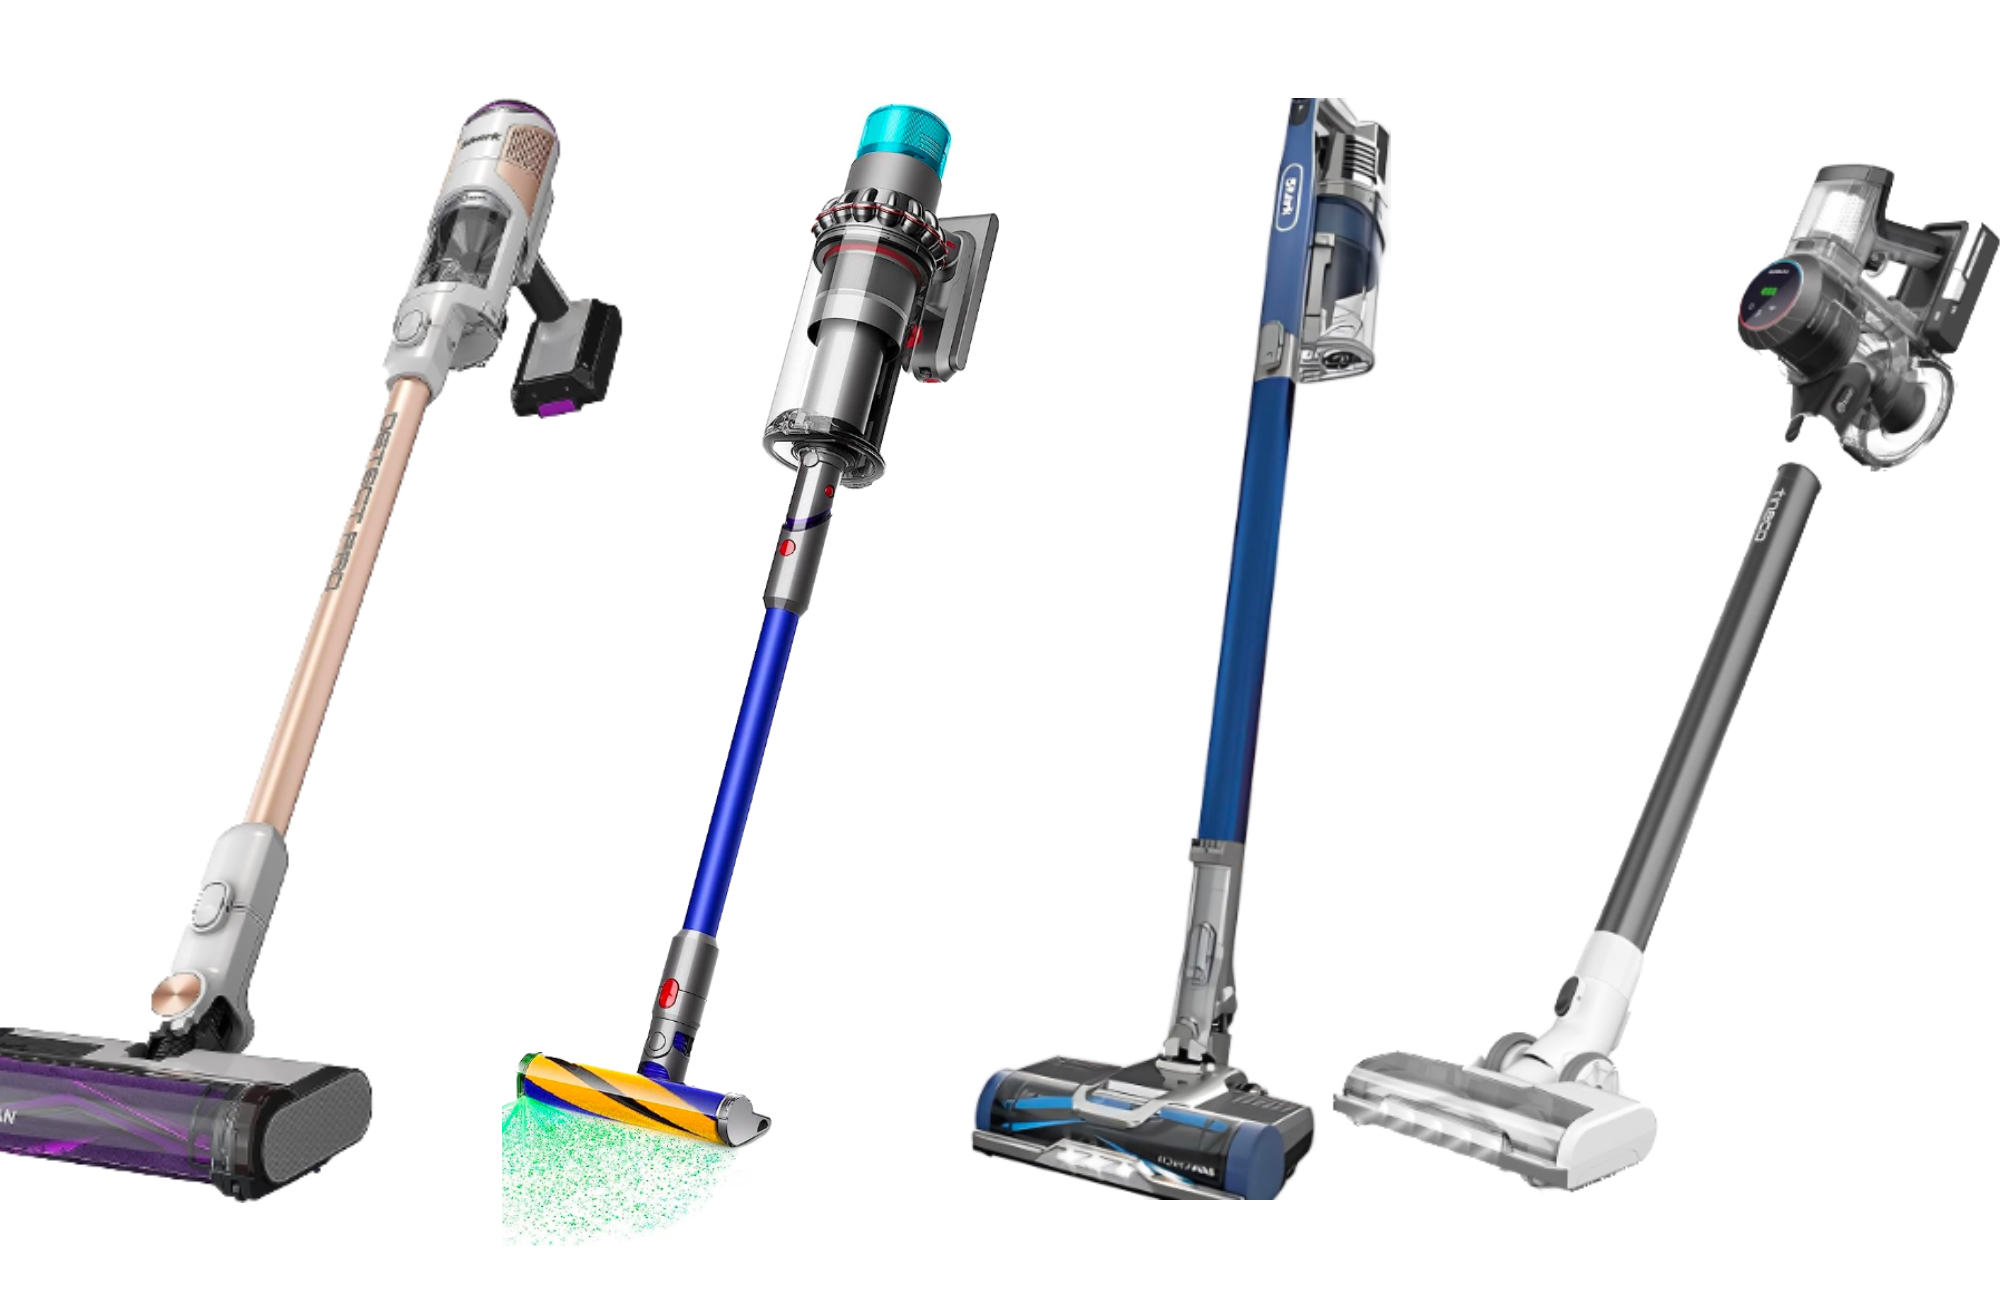 https://www.popsci.com/uploads/2021/07/14/The-best-stick-vacuums-of-2023.jpg?auto=webp